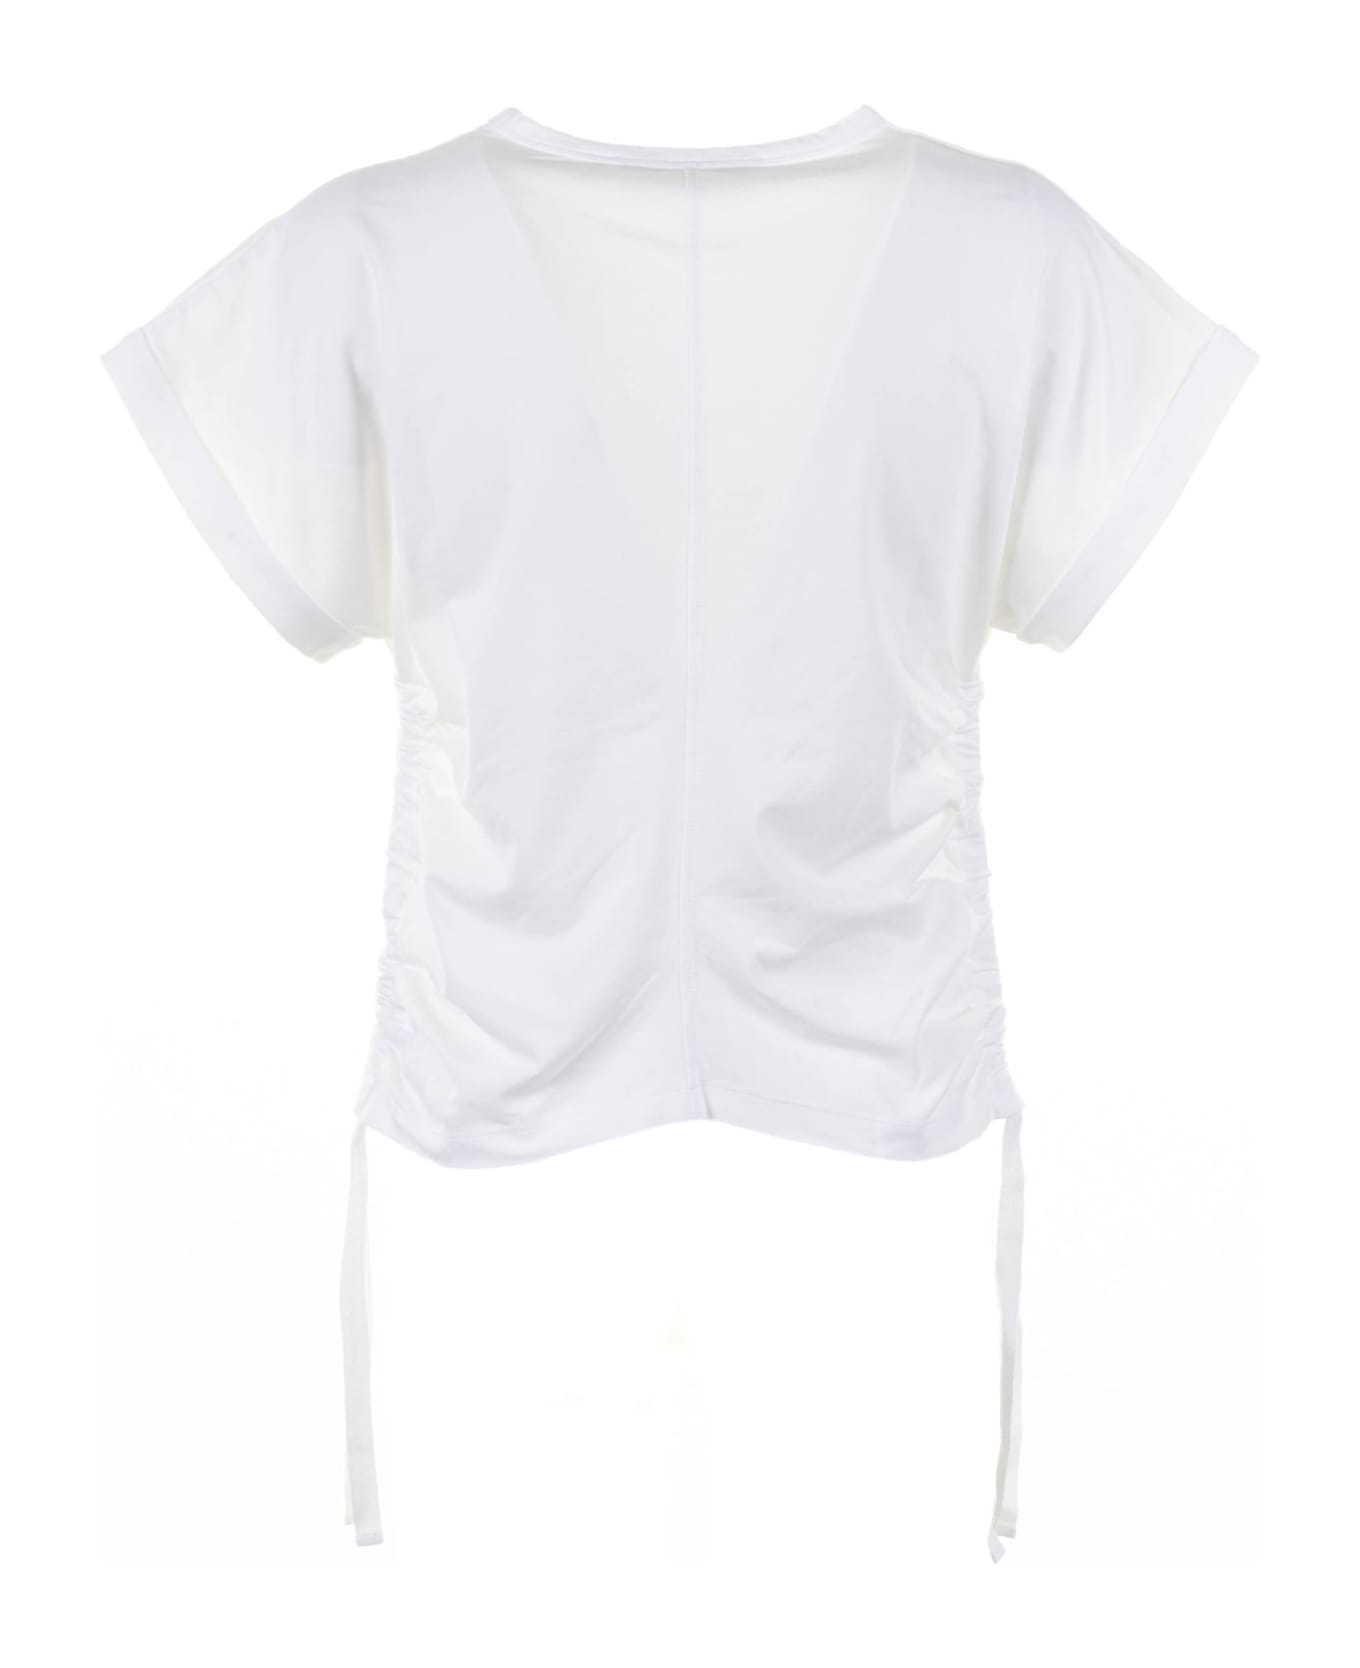 19.70 Nineteen Seventy T-shirt Whit Adjustable Side Gathering - BIANCO